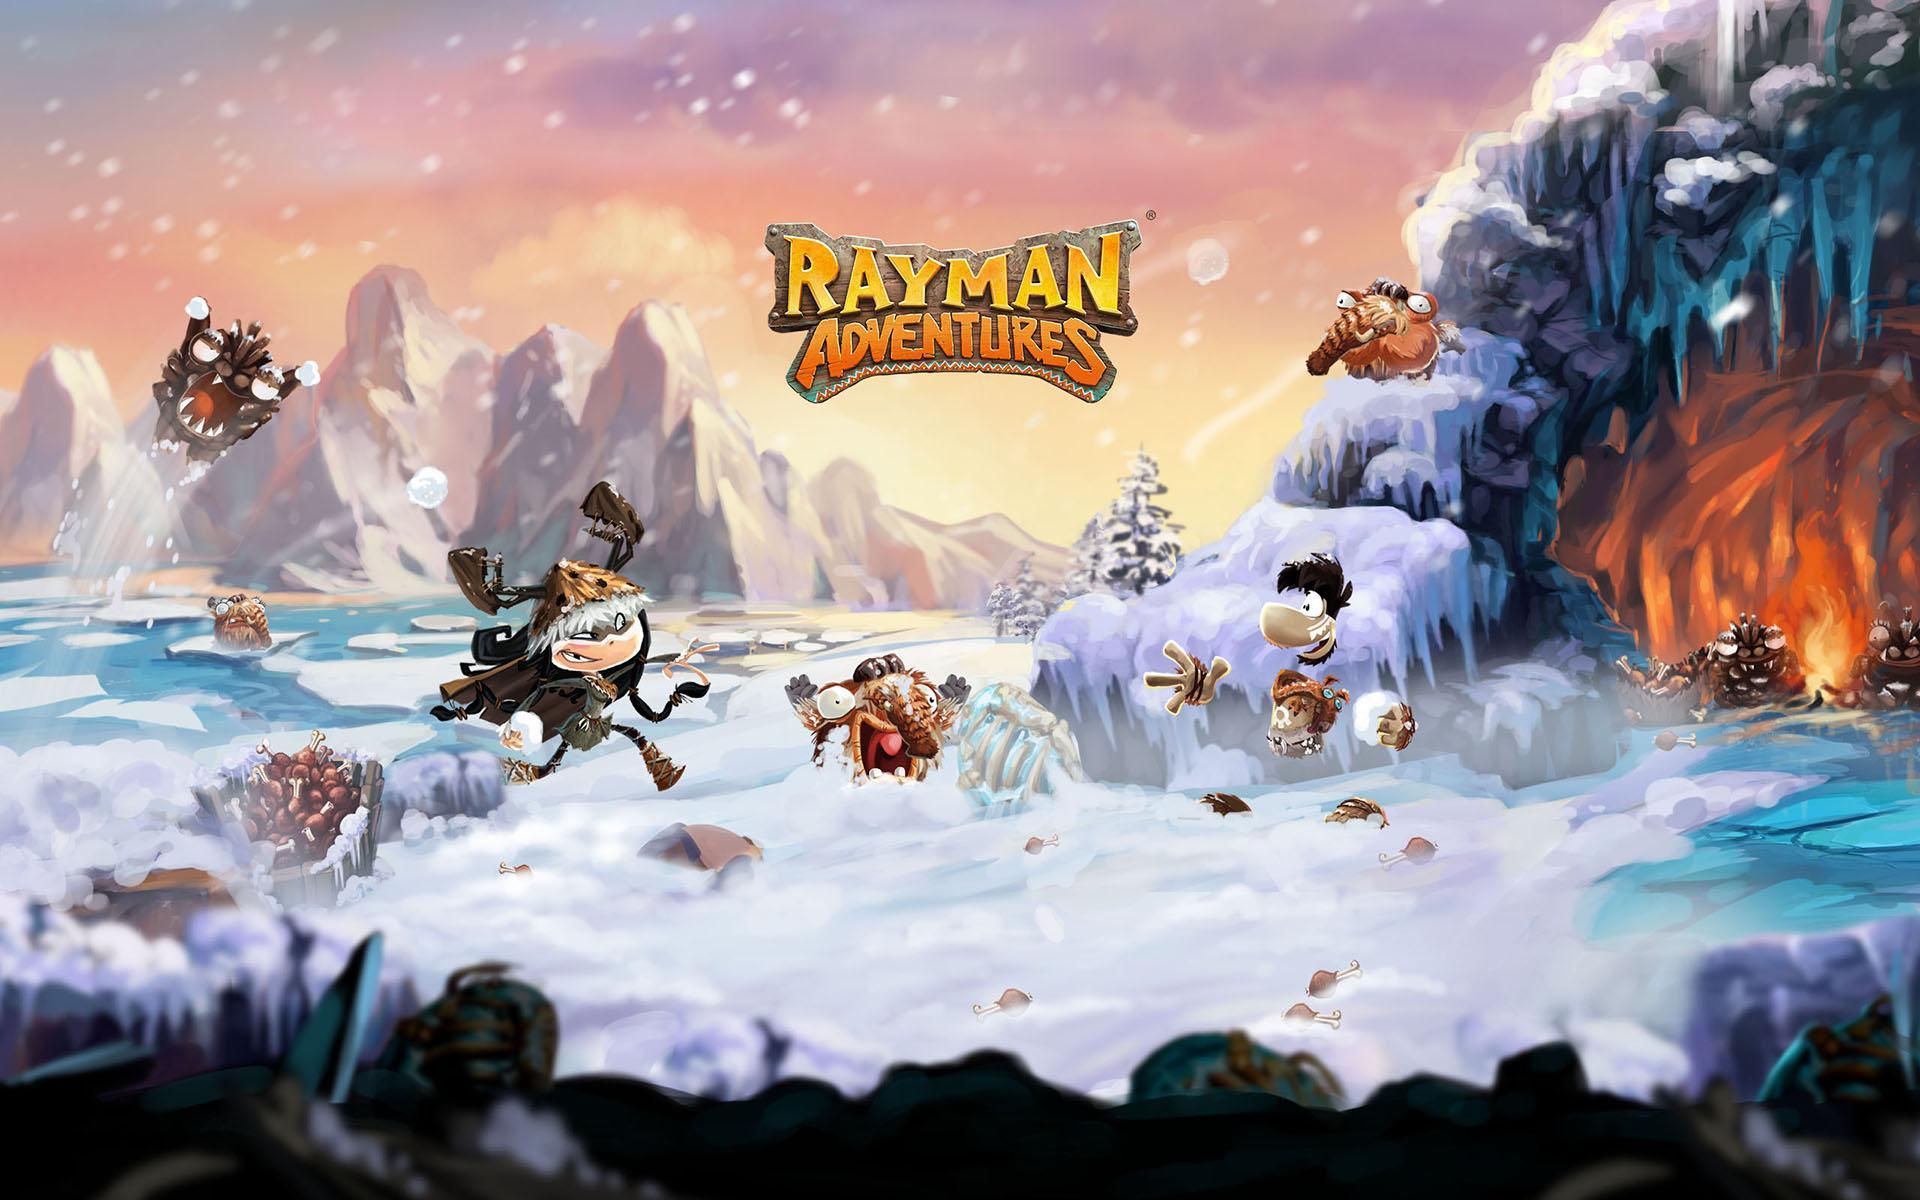 Rayman® Legends Beatbox APK (Android App) - Baixar Grátis